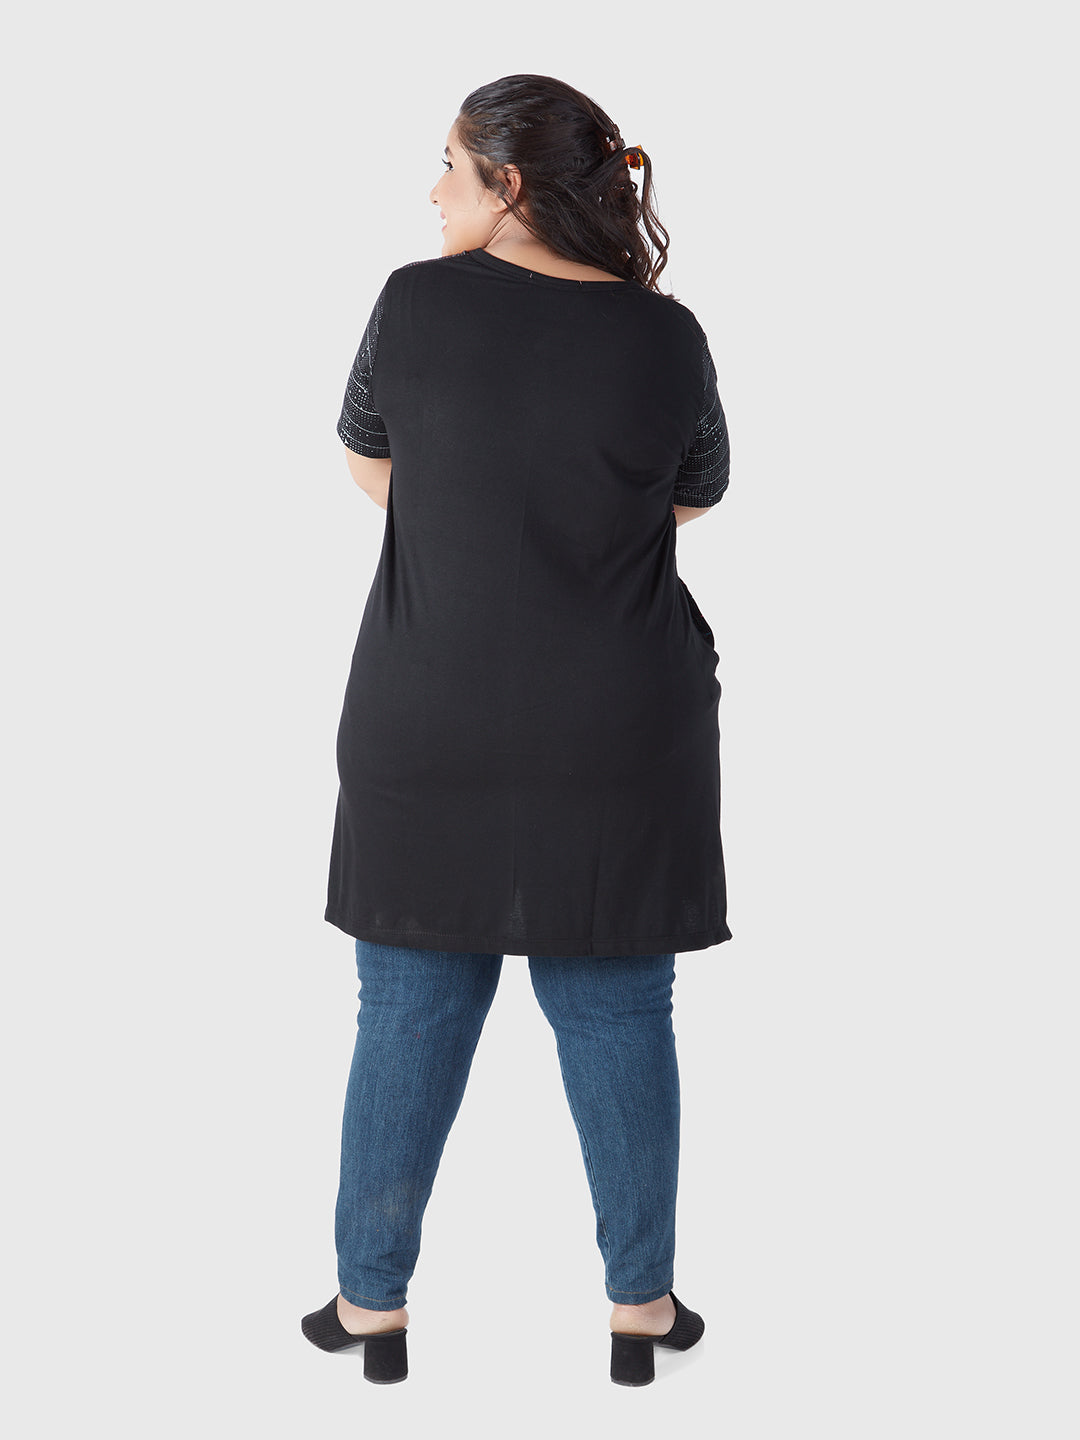 Plus Size Printed Long Tops For Women Half Sleeves - Black